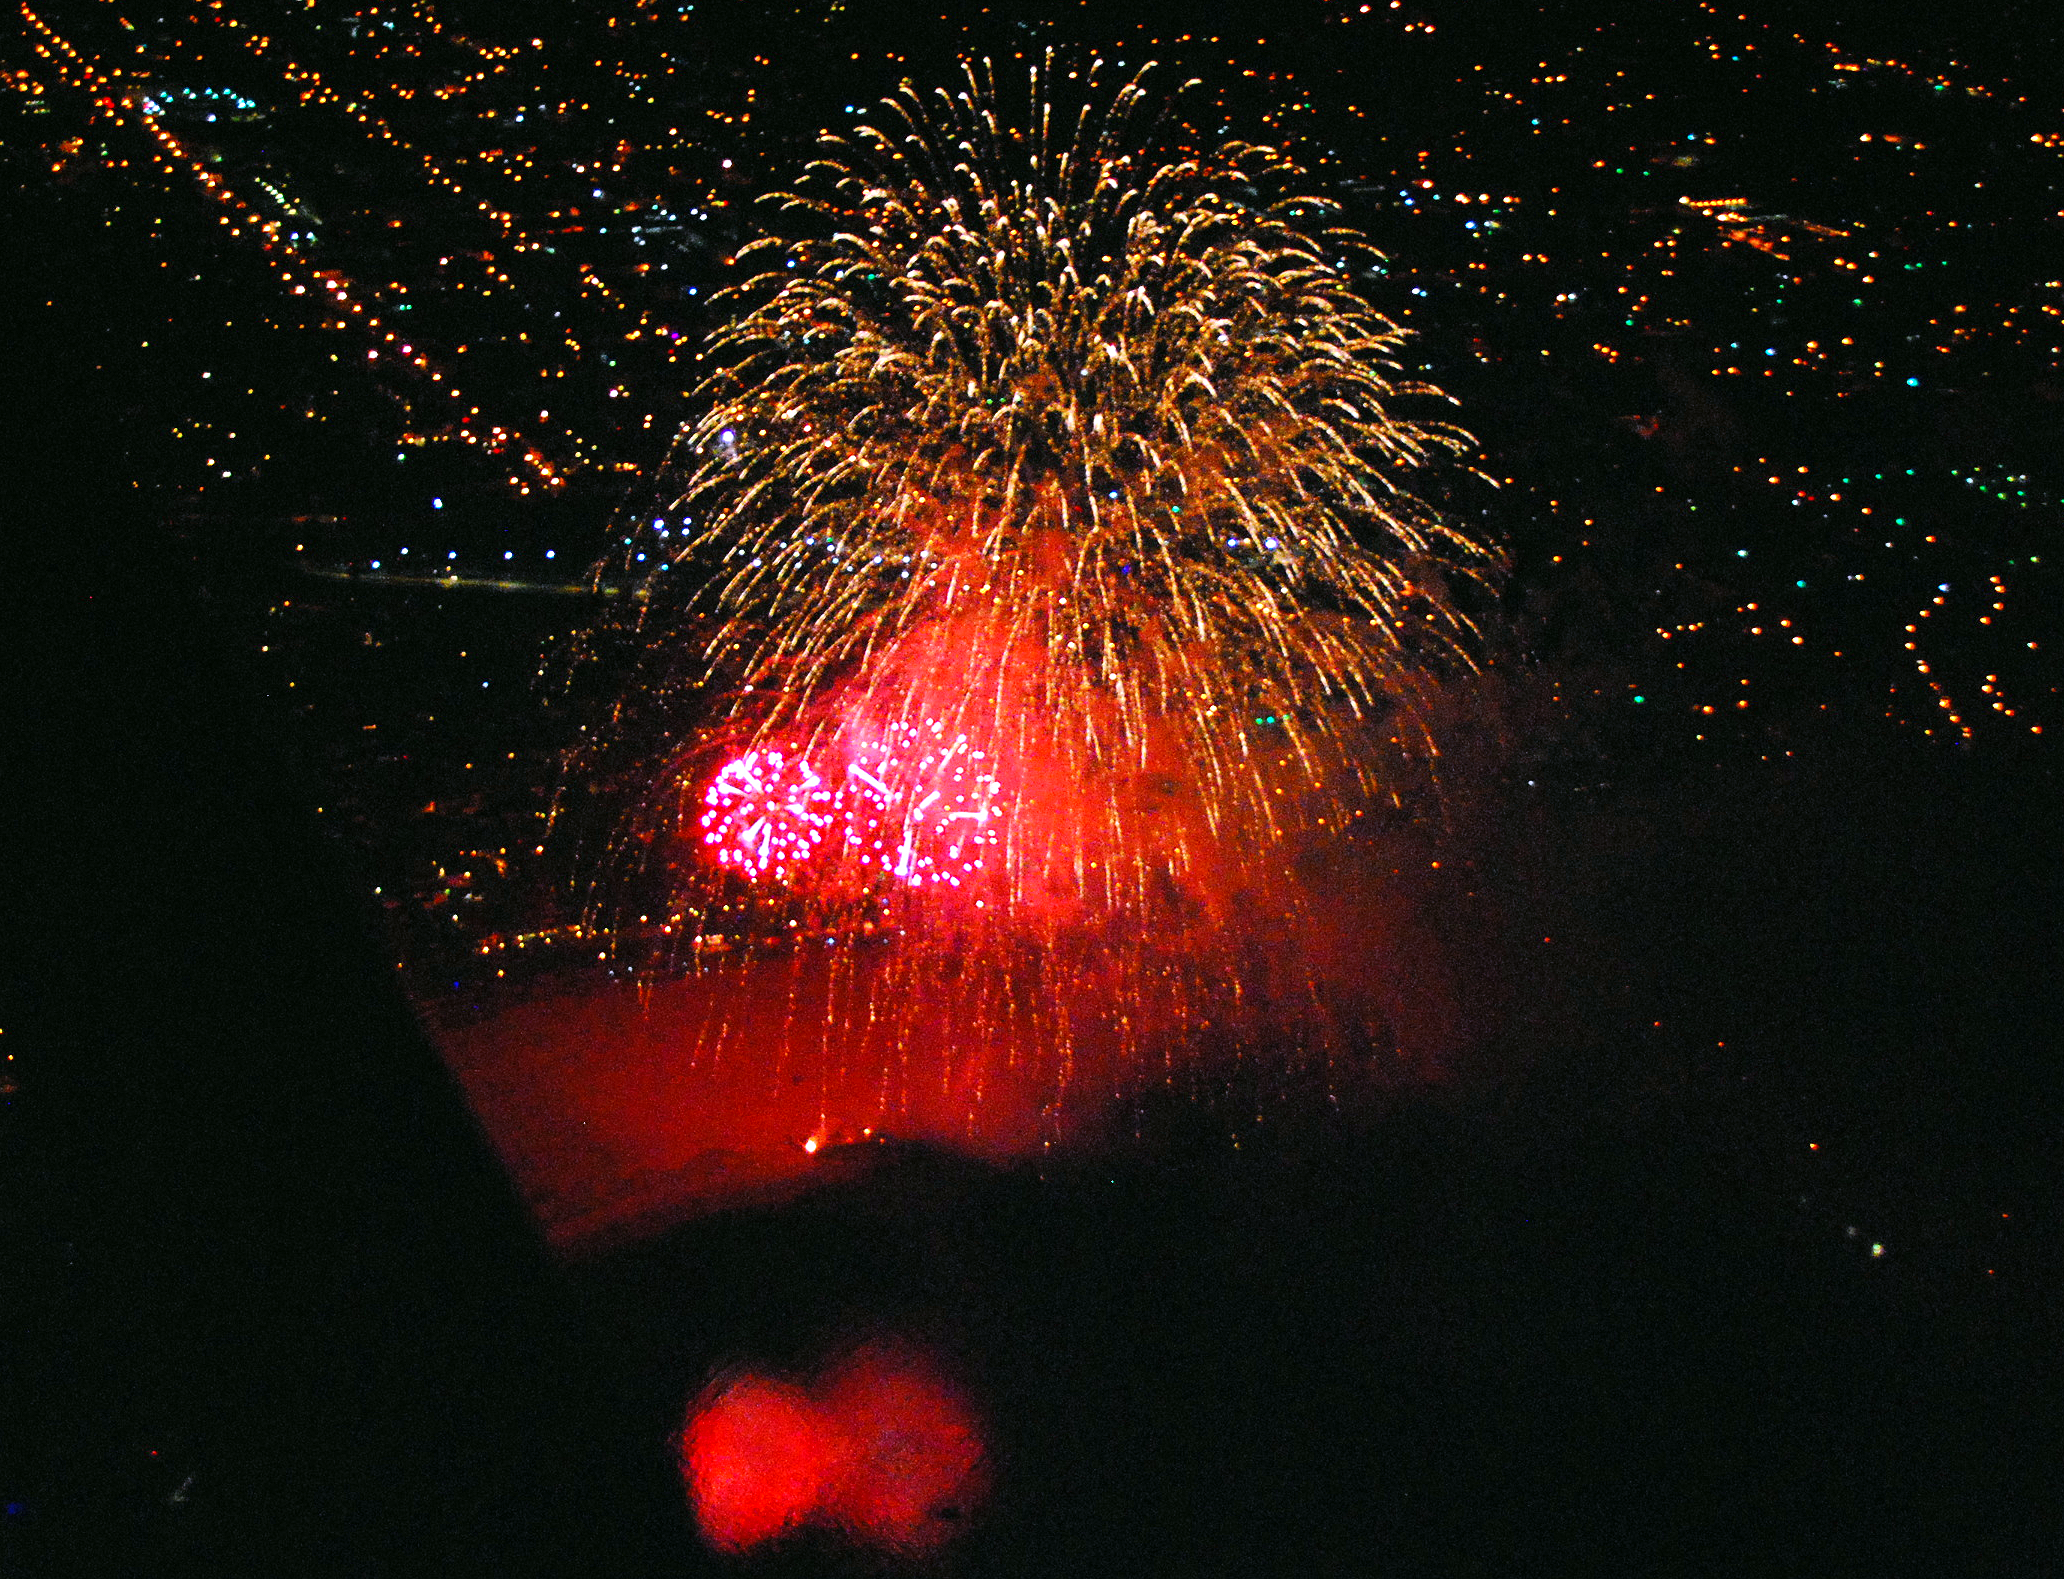 Fireworks explode just offshore of Santa Barbara, California, on July 4, 2010. Photo by John Wiley, ja4u.net.